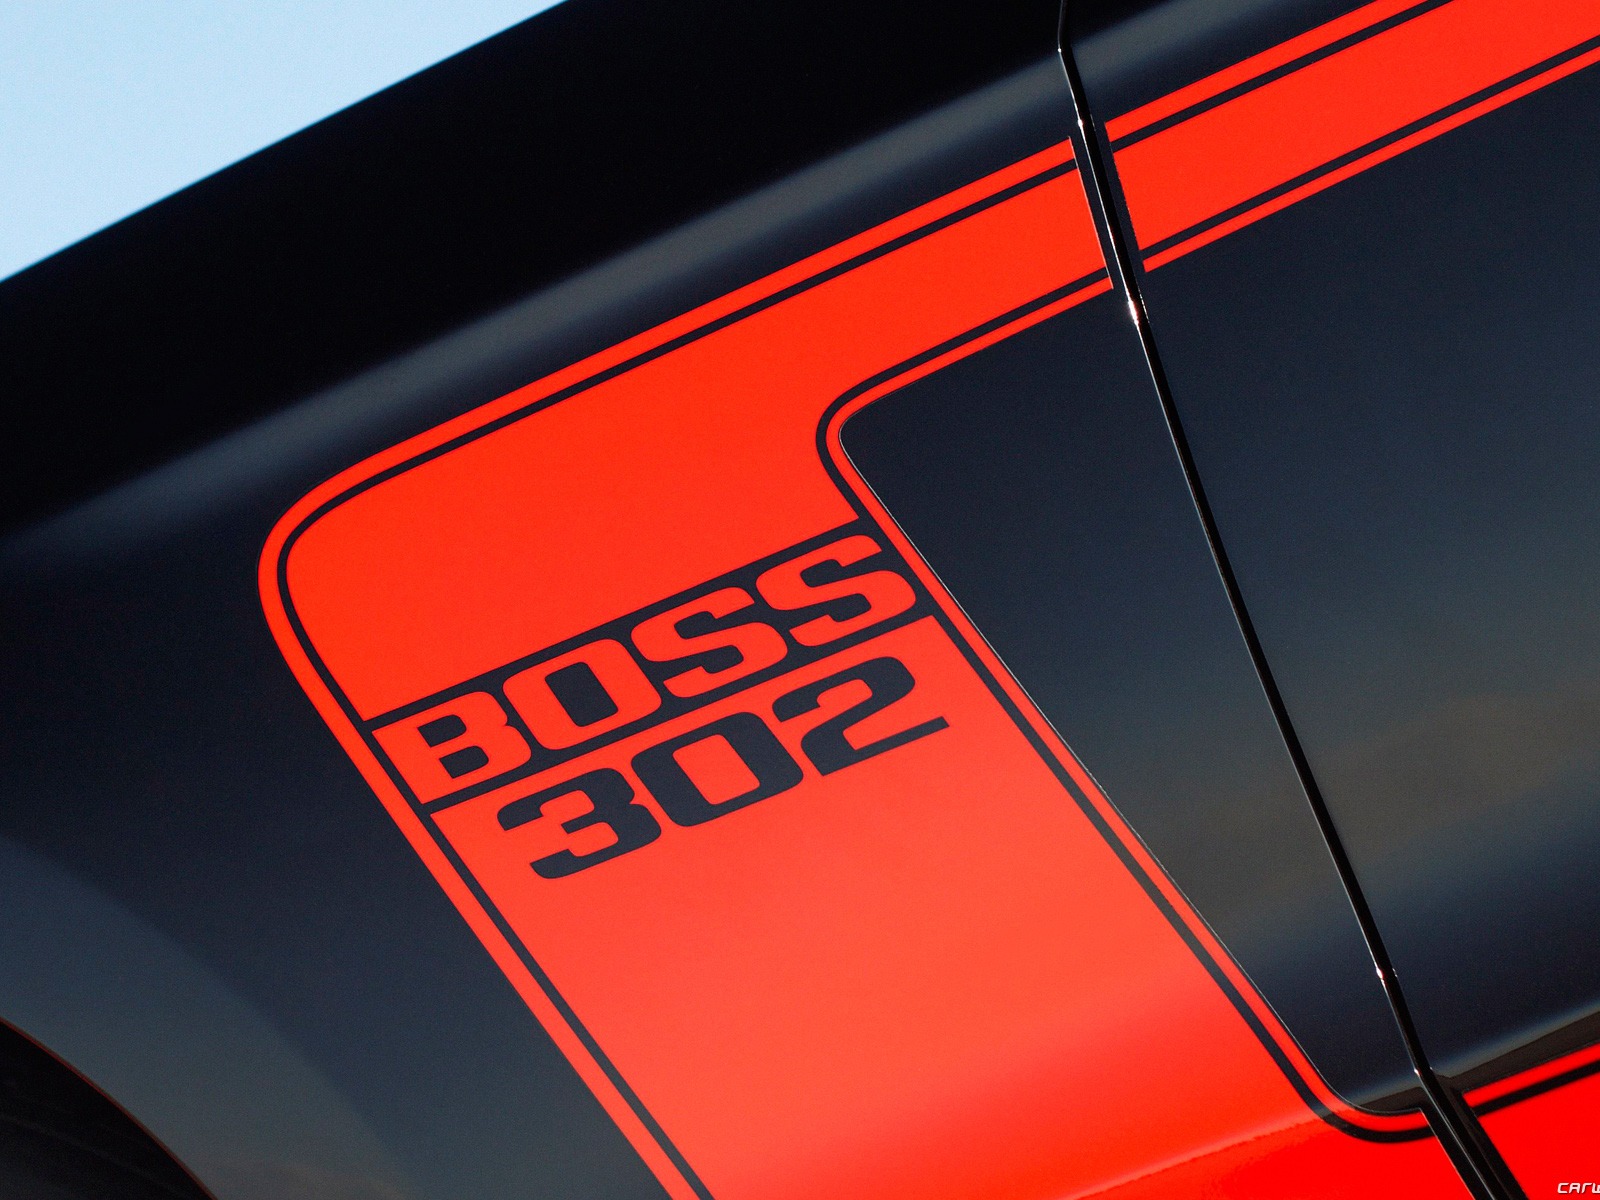 Ford Mustang Boss 302 Laguna Seca - 2012 福特 #17 - 1600x1200